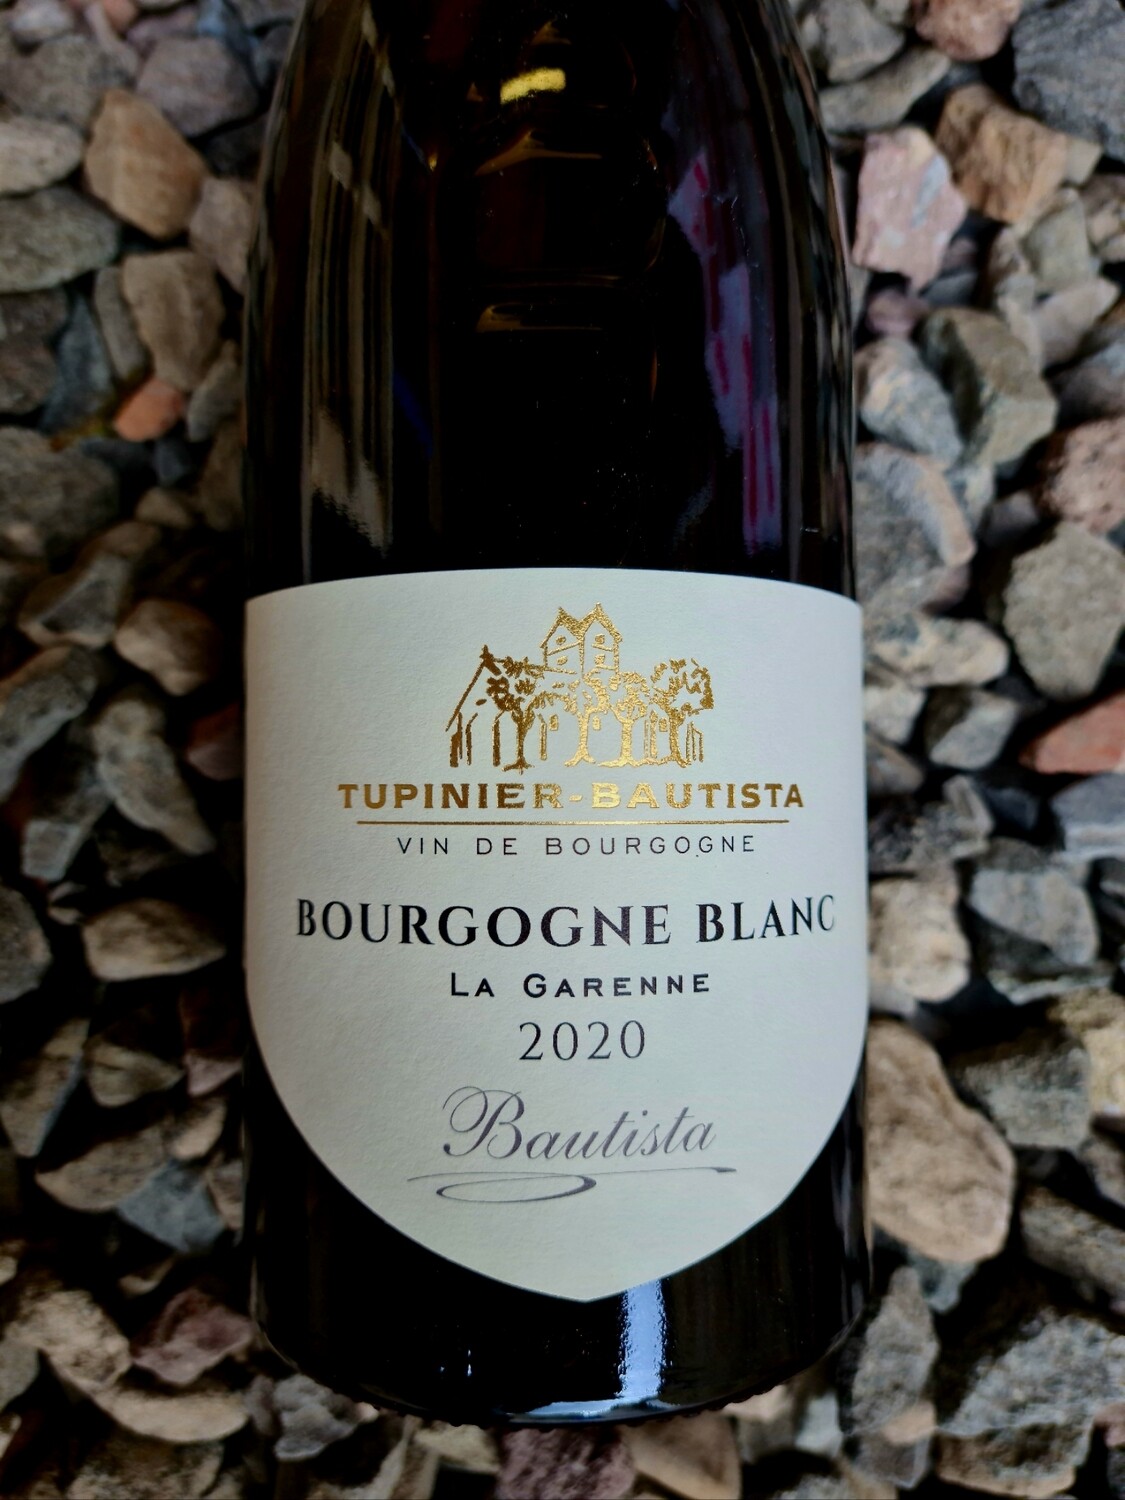 Tupinier Bautista Bourgogne Blanc 'La Garenne' 2020